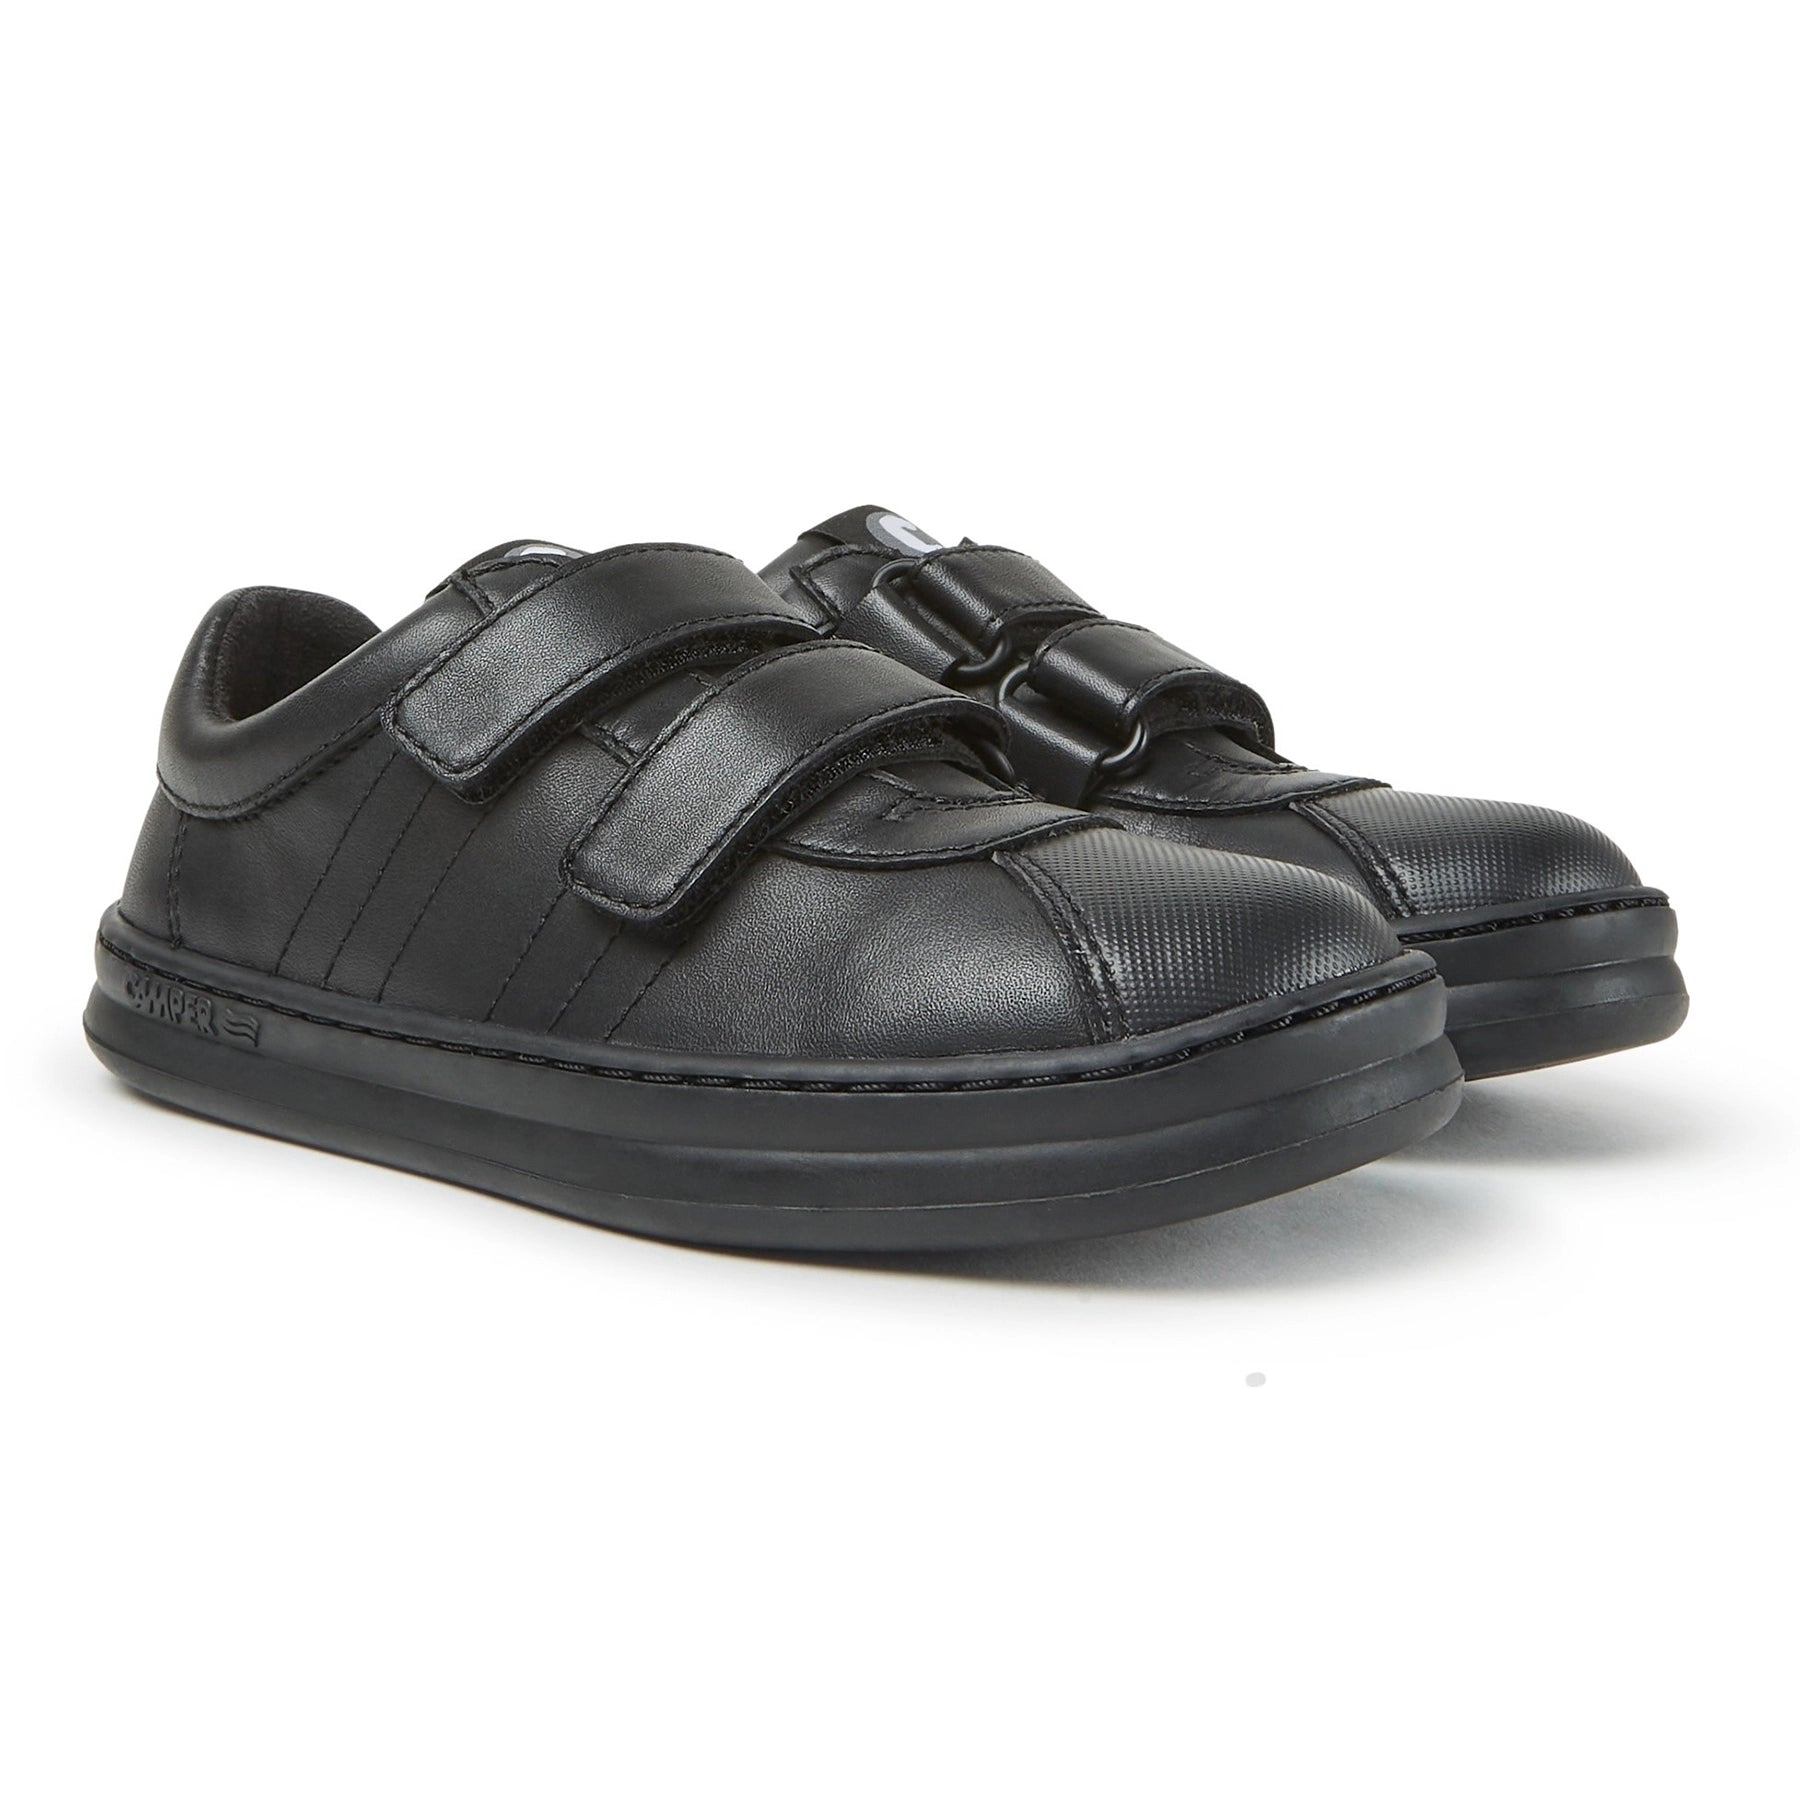 An image of Buy Camper Runner Kids School Shoes Black – SmallSmart UK EU36/UK3.5